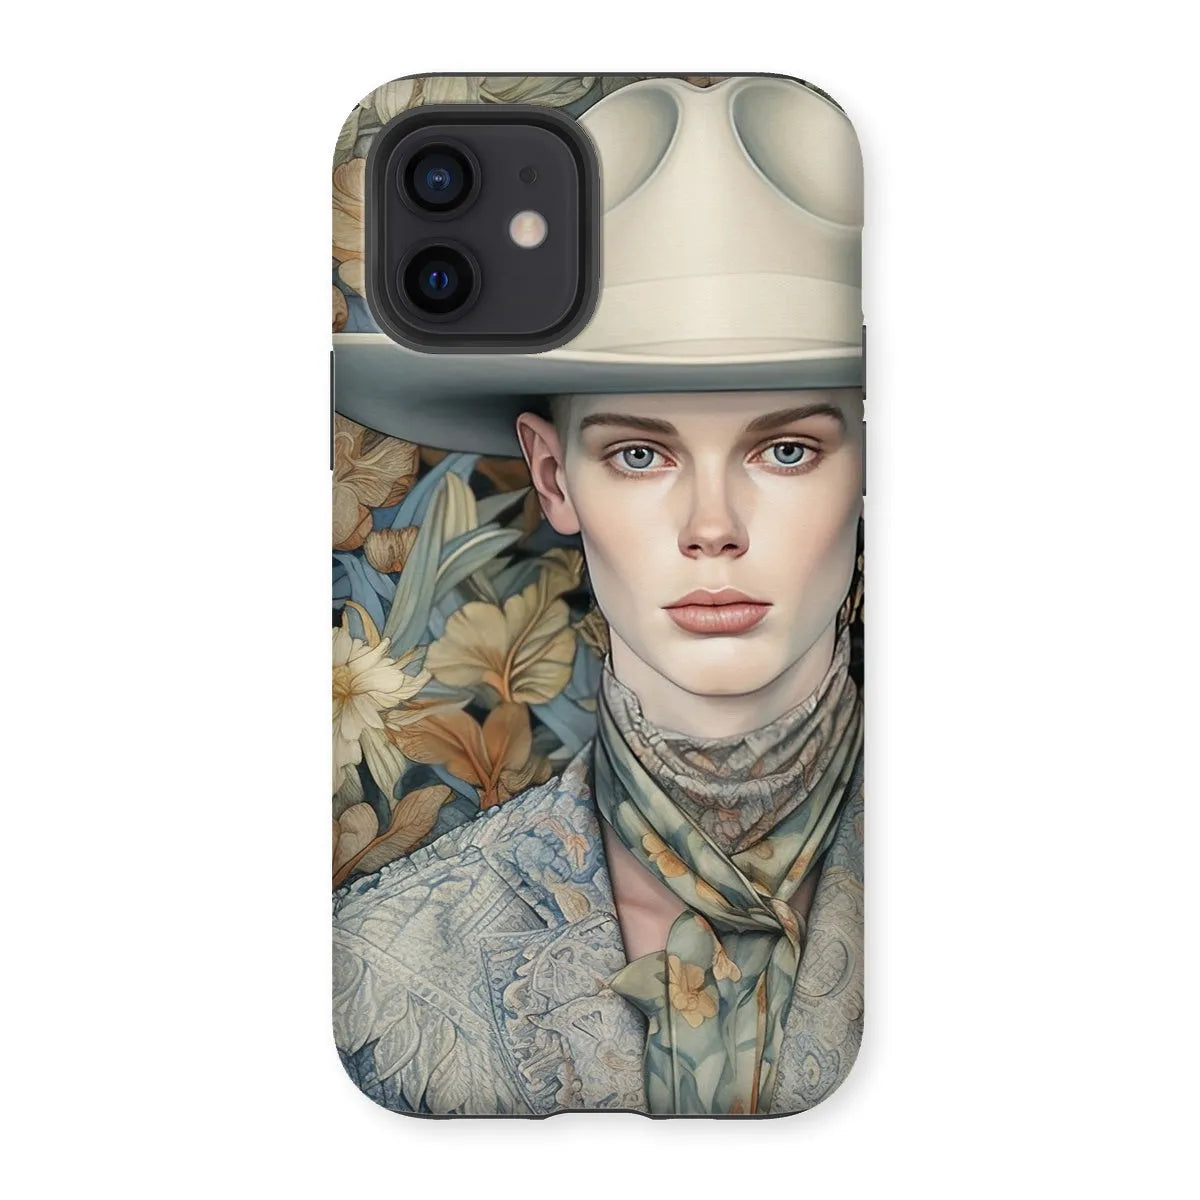 Jasper The Gay Cowboy - Dandy Gay Aesthetic Art Phone Case - Iphone 12 / Matte - Mobile Phone Cases - Aesthetic Art